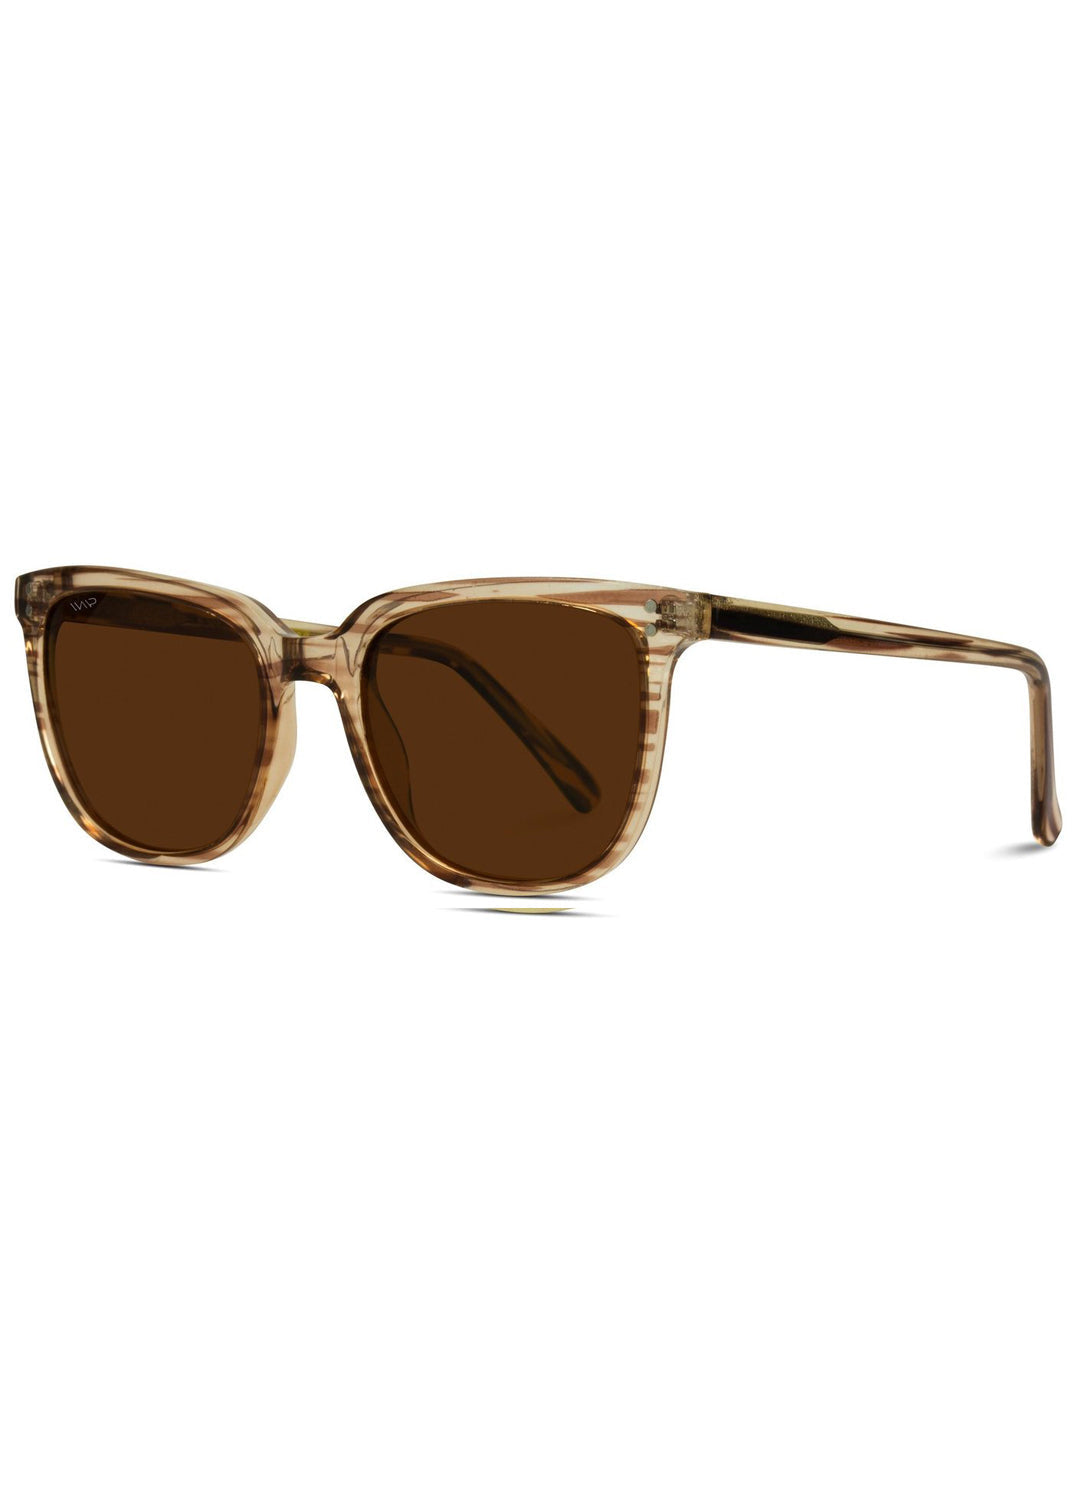 Brown Frame Square Sunglasses Accessories